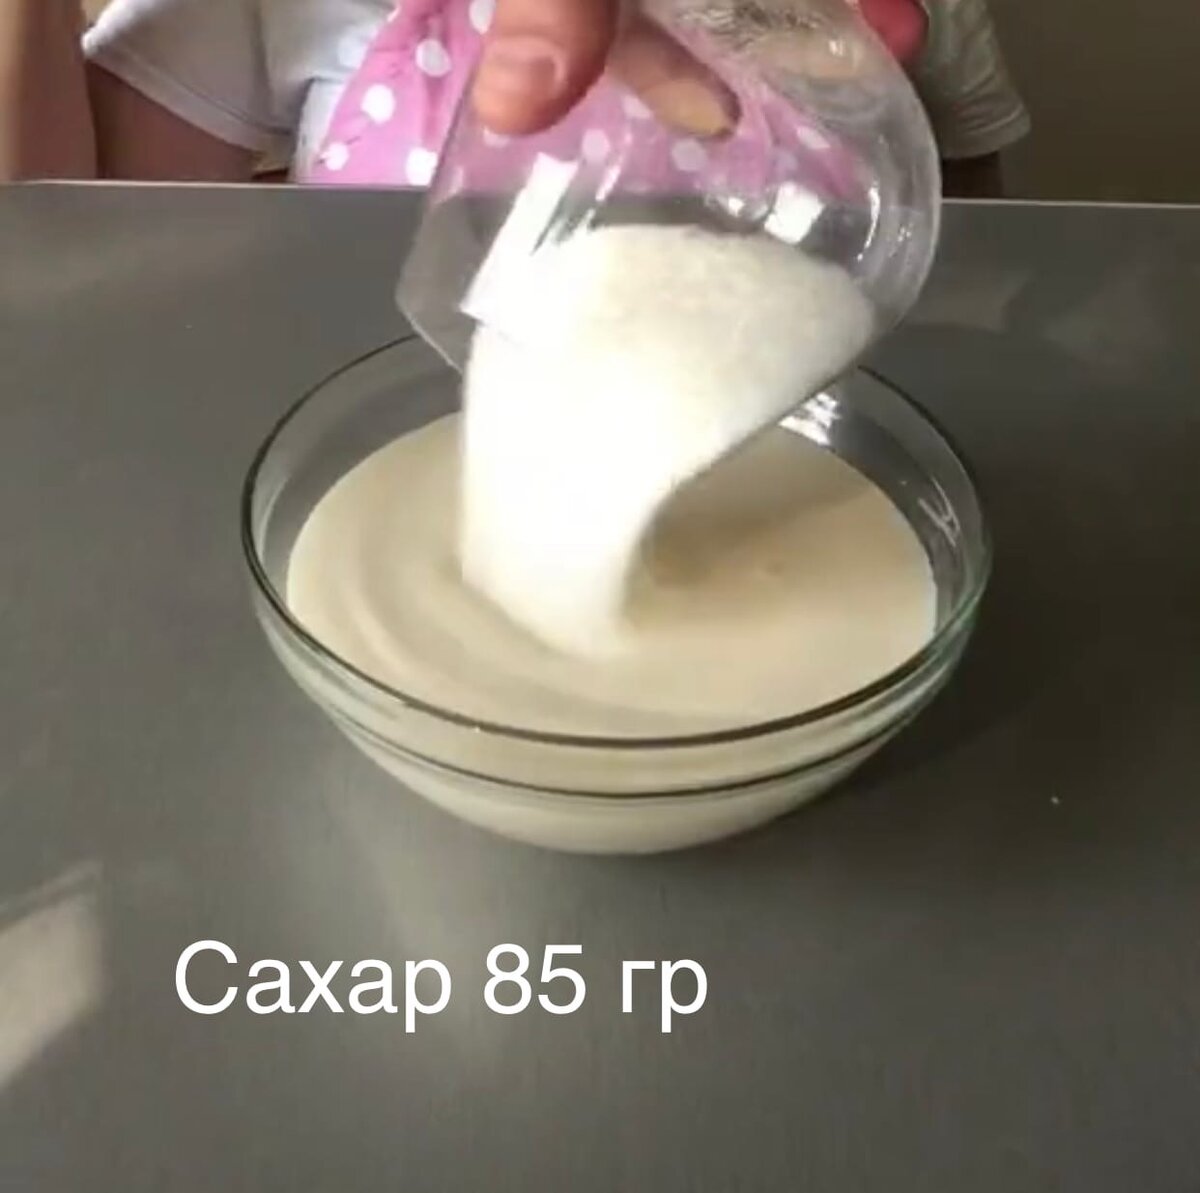 Шоколадный пудинг за 52 рубля? Ваши детки попросят добавки!